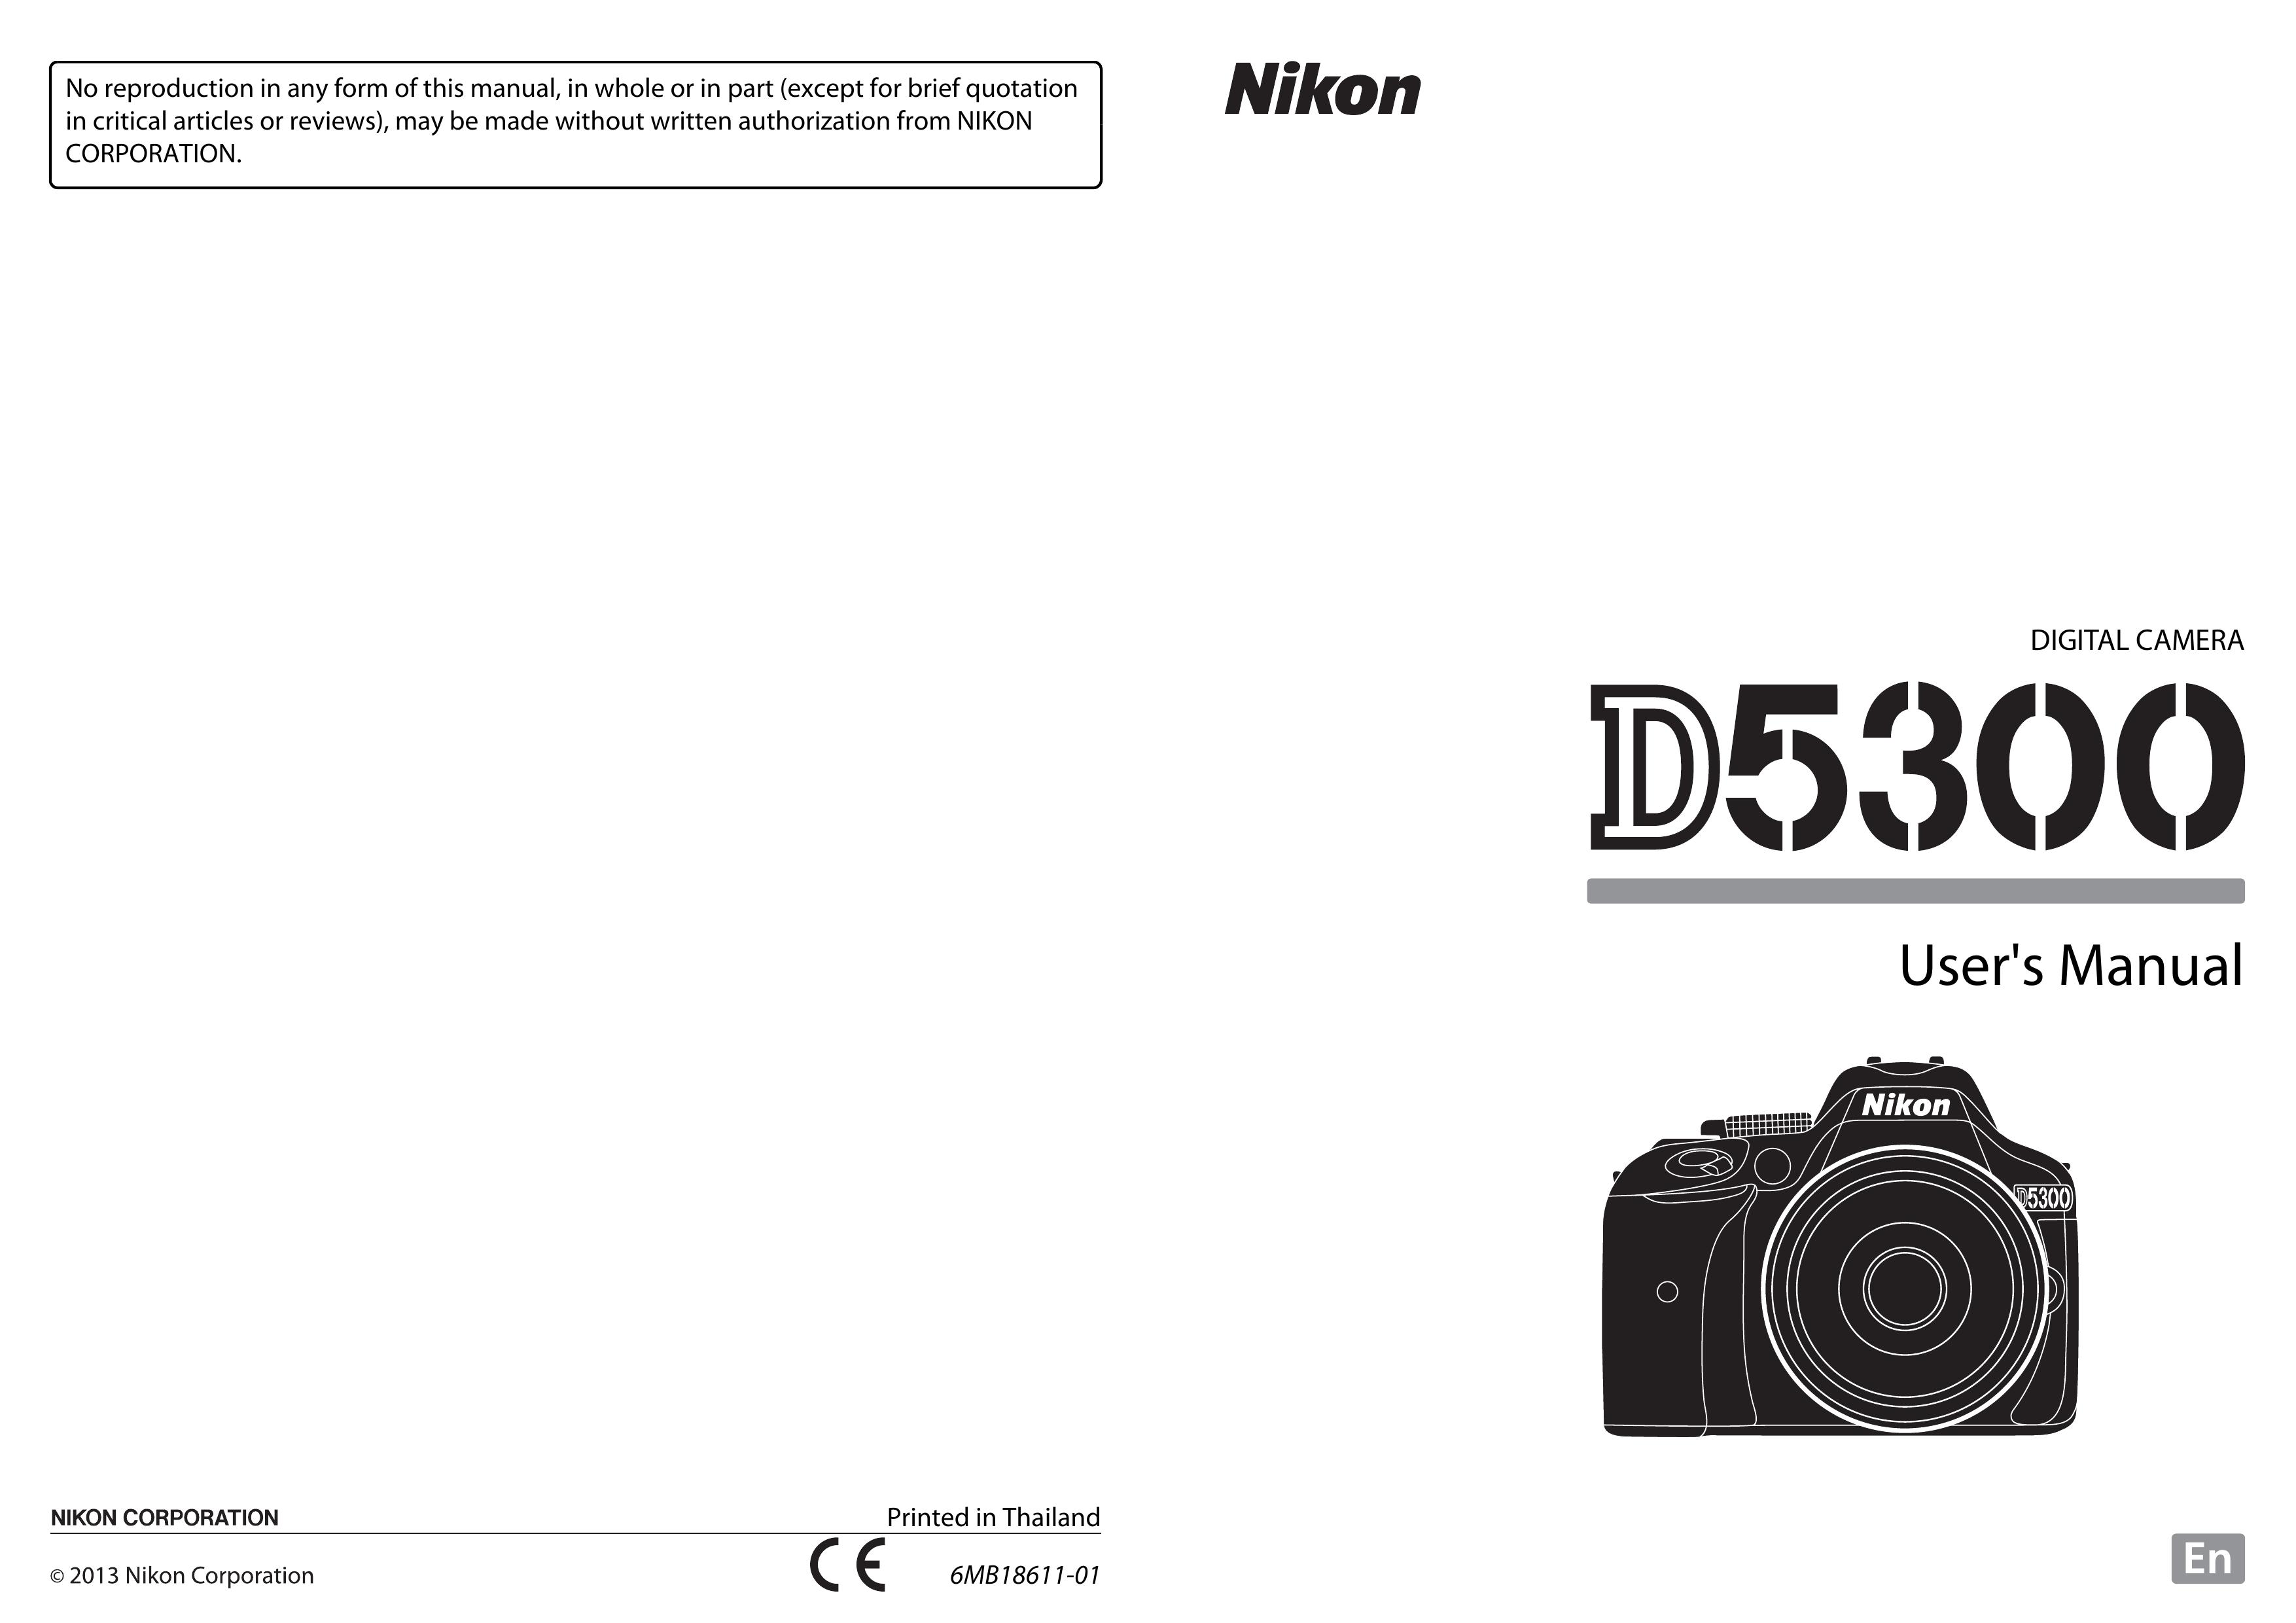 Nikon 13303 Digital Camera User Manual